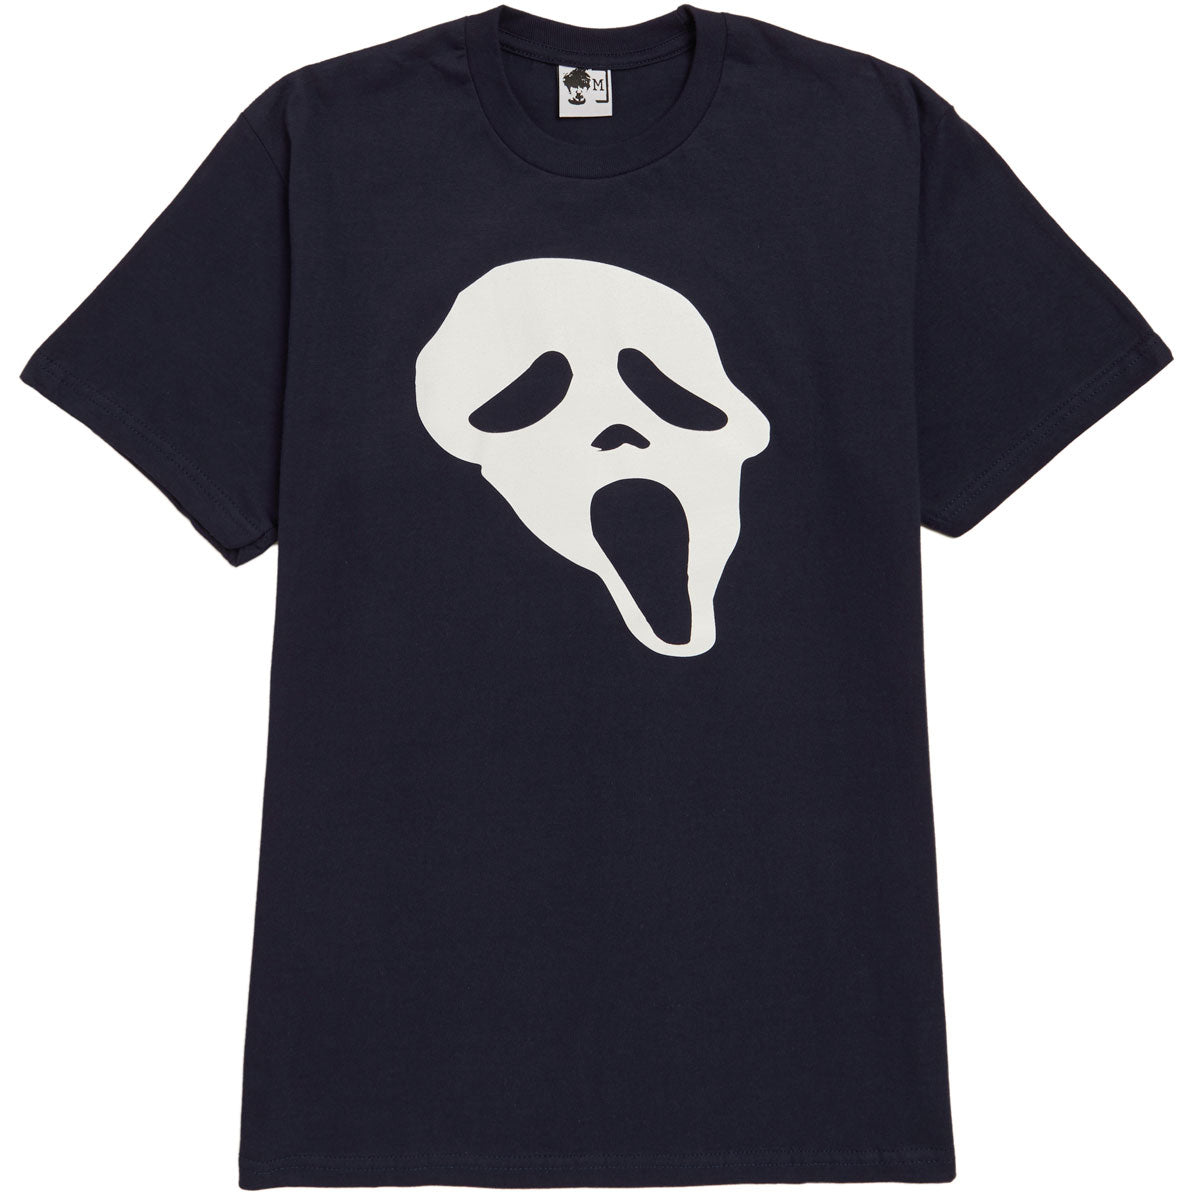 Stunt Large Ghostface T-Shirt - Navy image 1